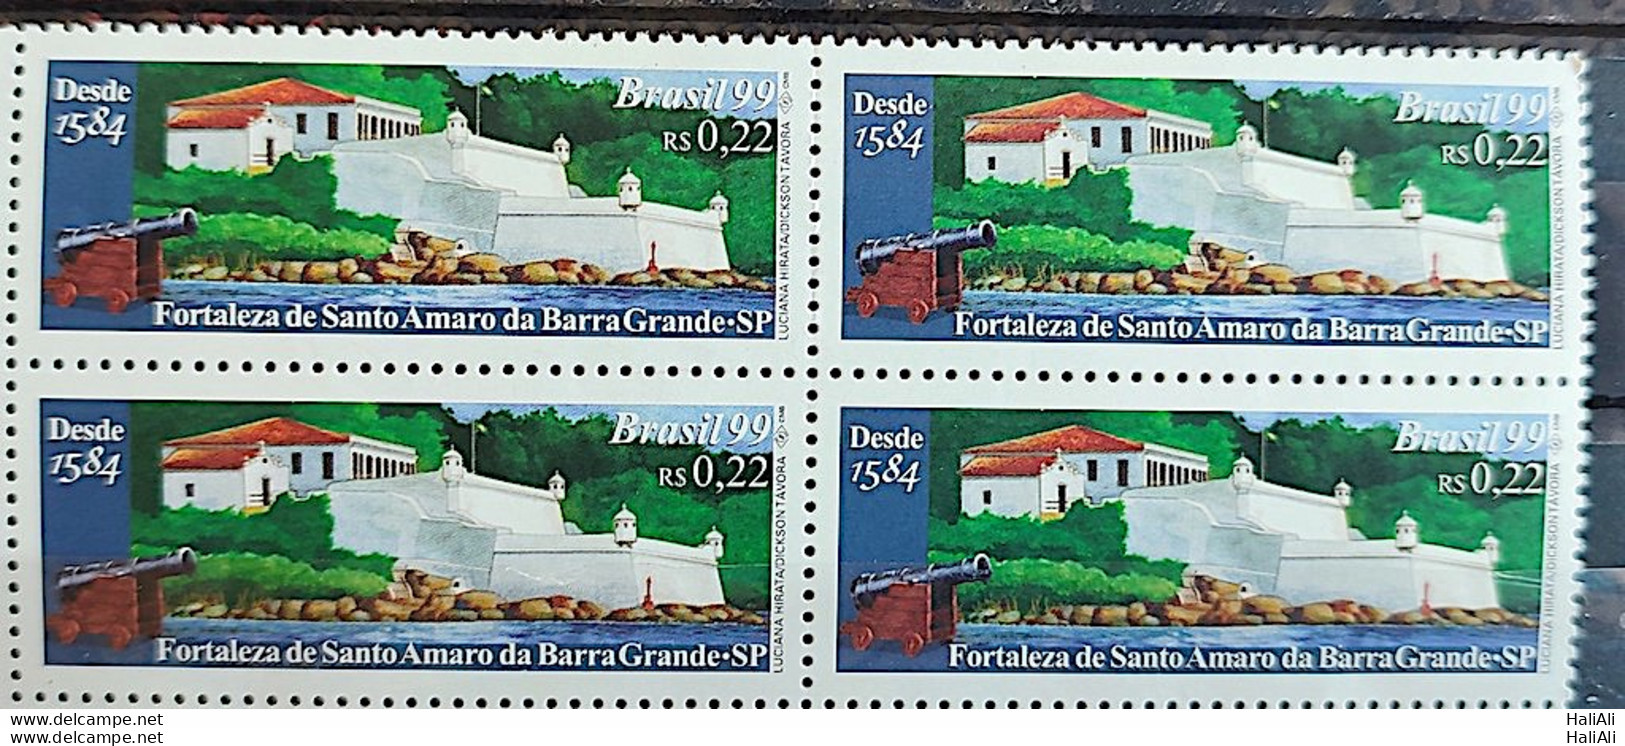 C 2194 Brazil Stamp Fortaleza De Santo Amaro Da Barra Grande Military 1999 Block Of 4 - Unused Stamps